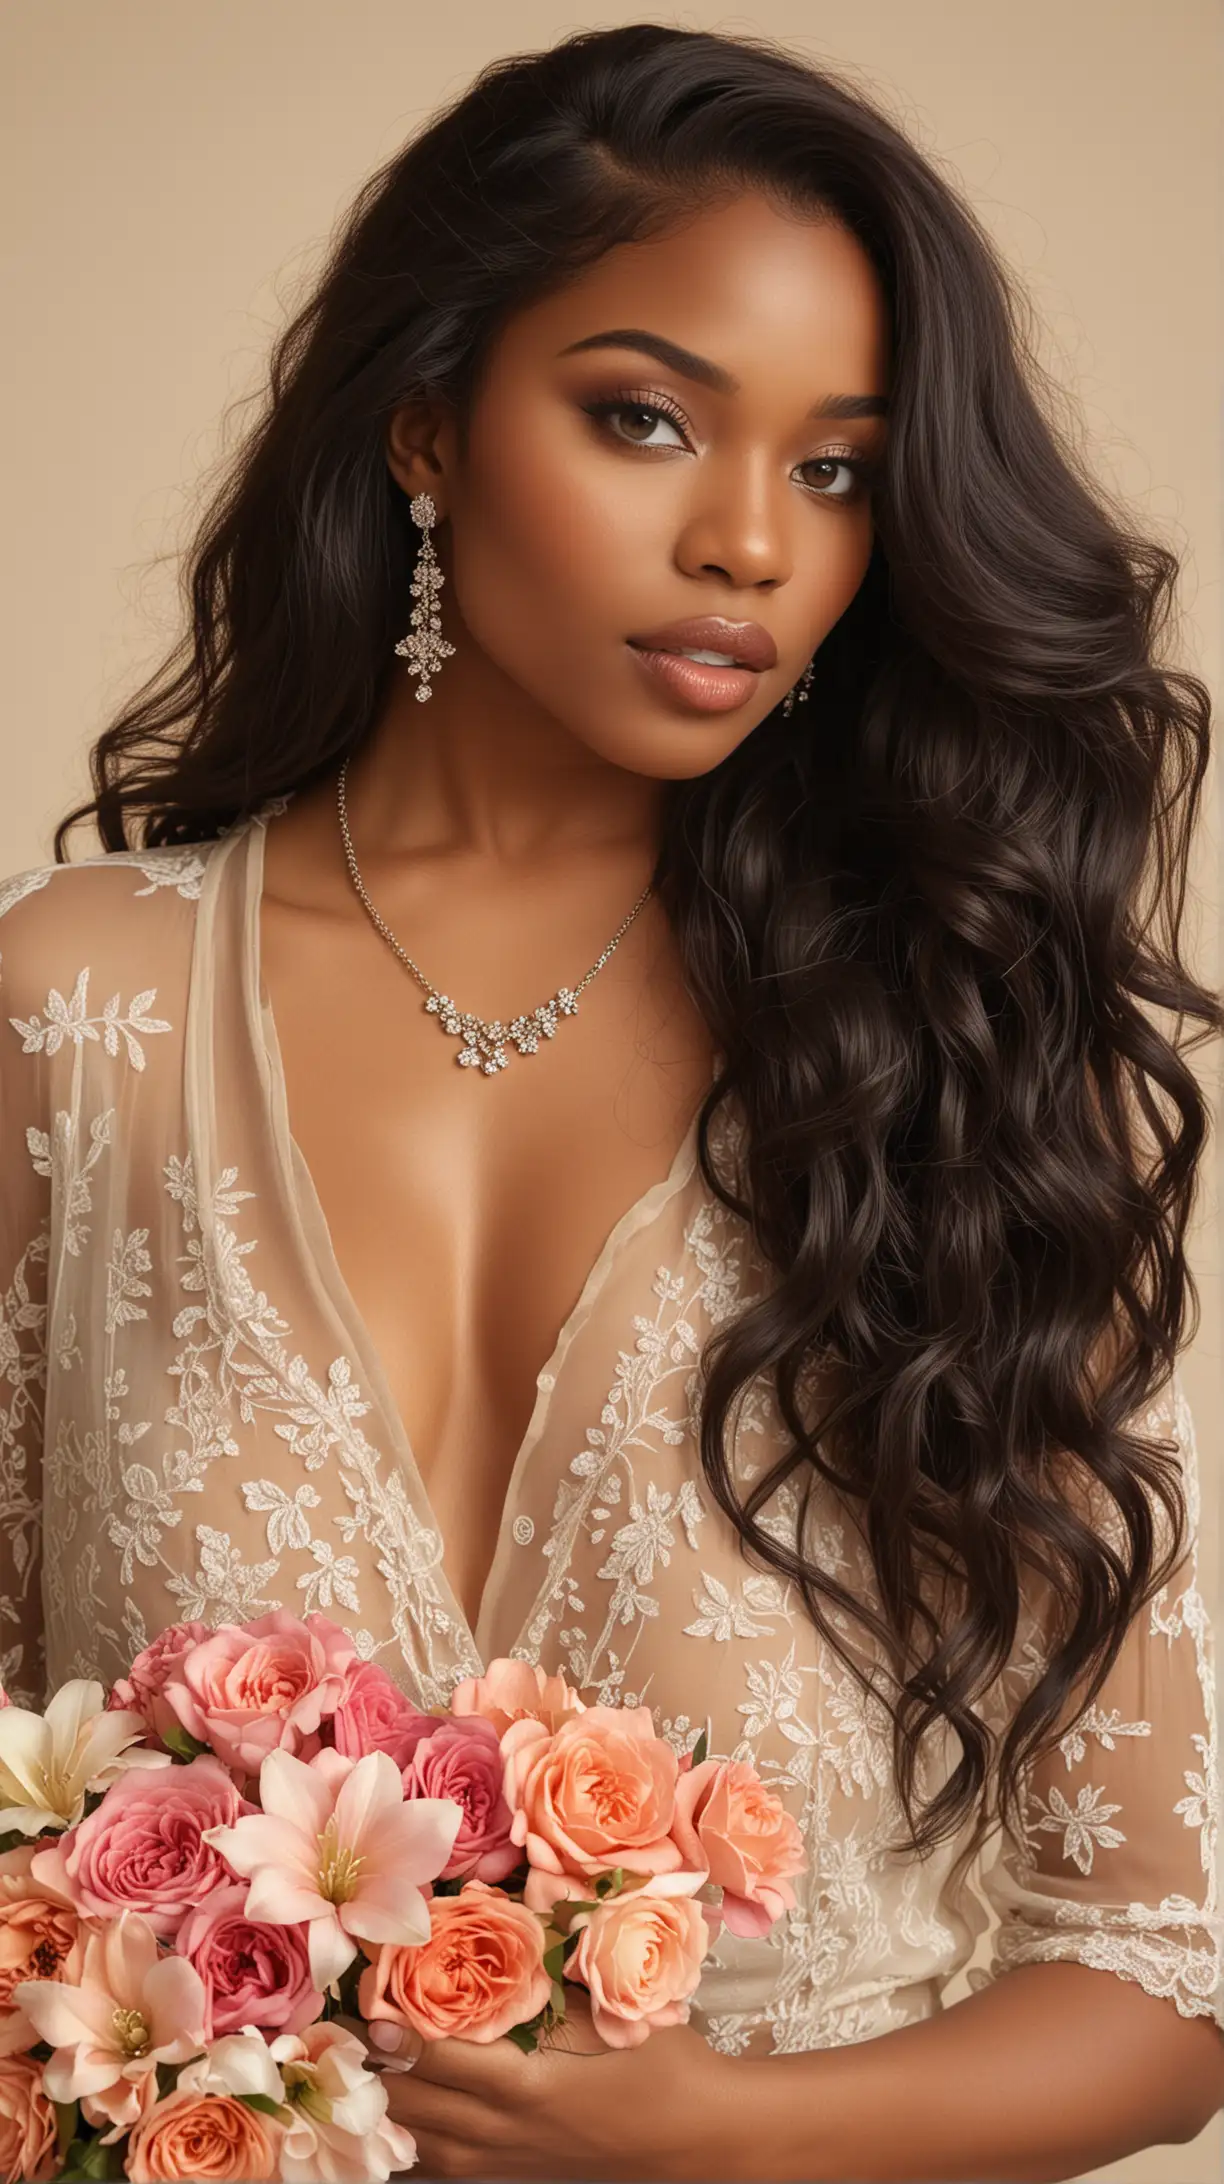 Elegant Black Woman with Bouquet on Beige Background